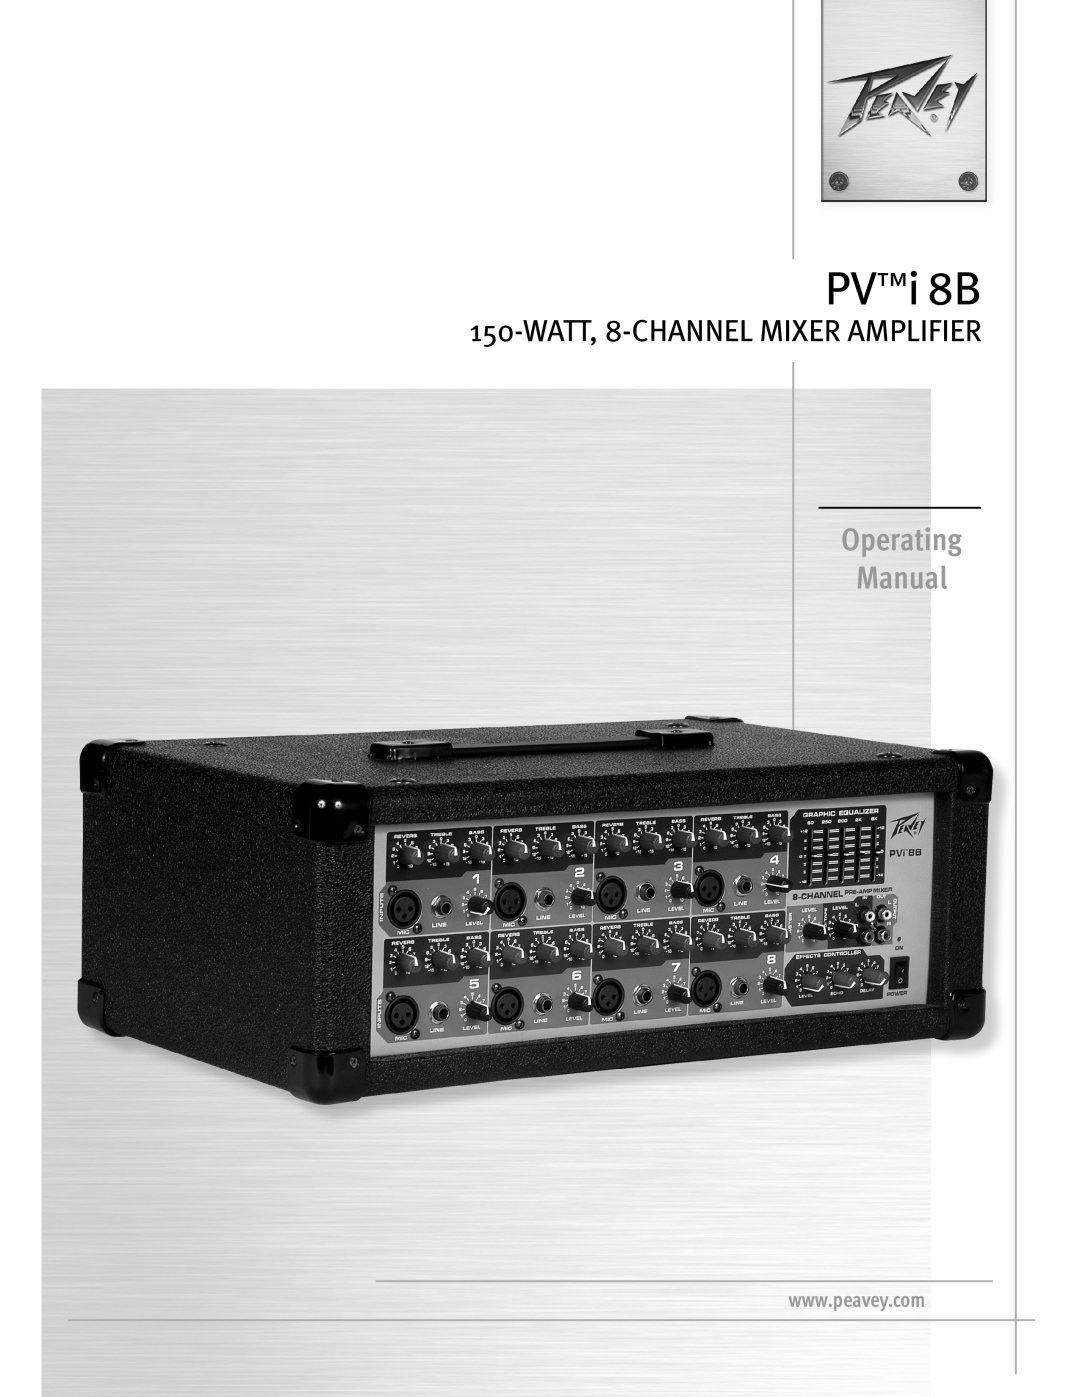 Peavey PVTMi 8B manual PVi 8B, Operating Manual, Watt, 8-ChannelMixer Amplifier 